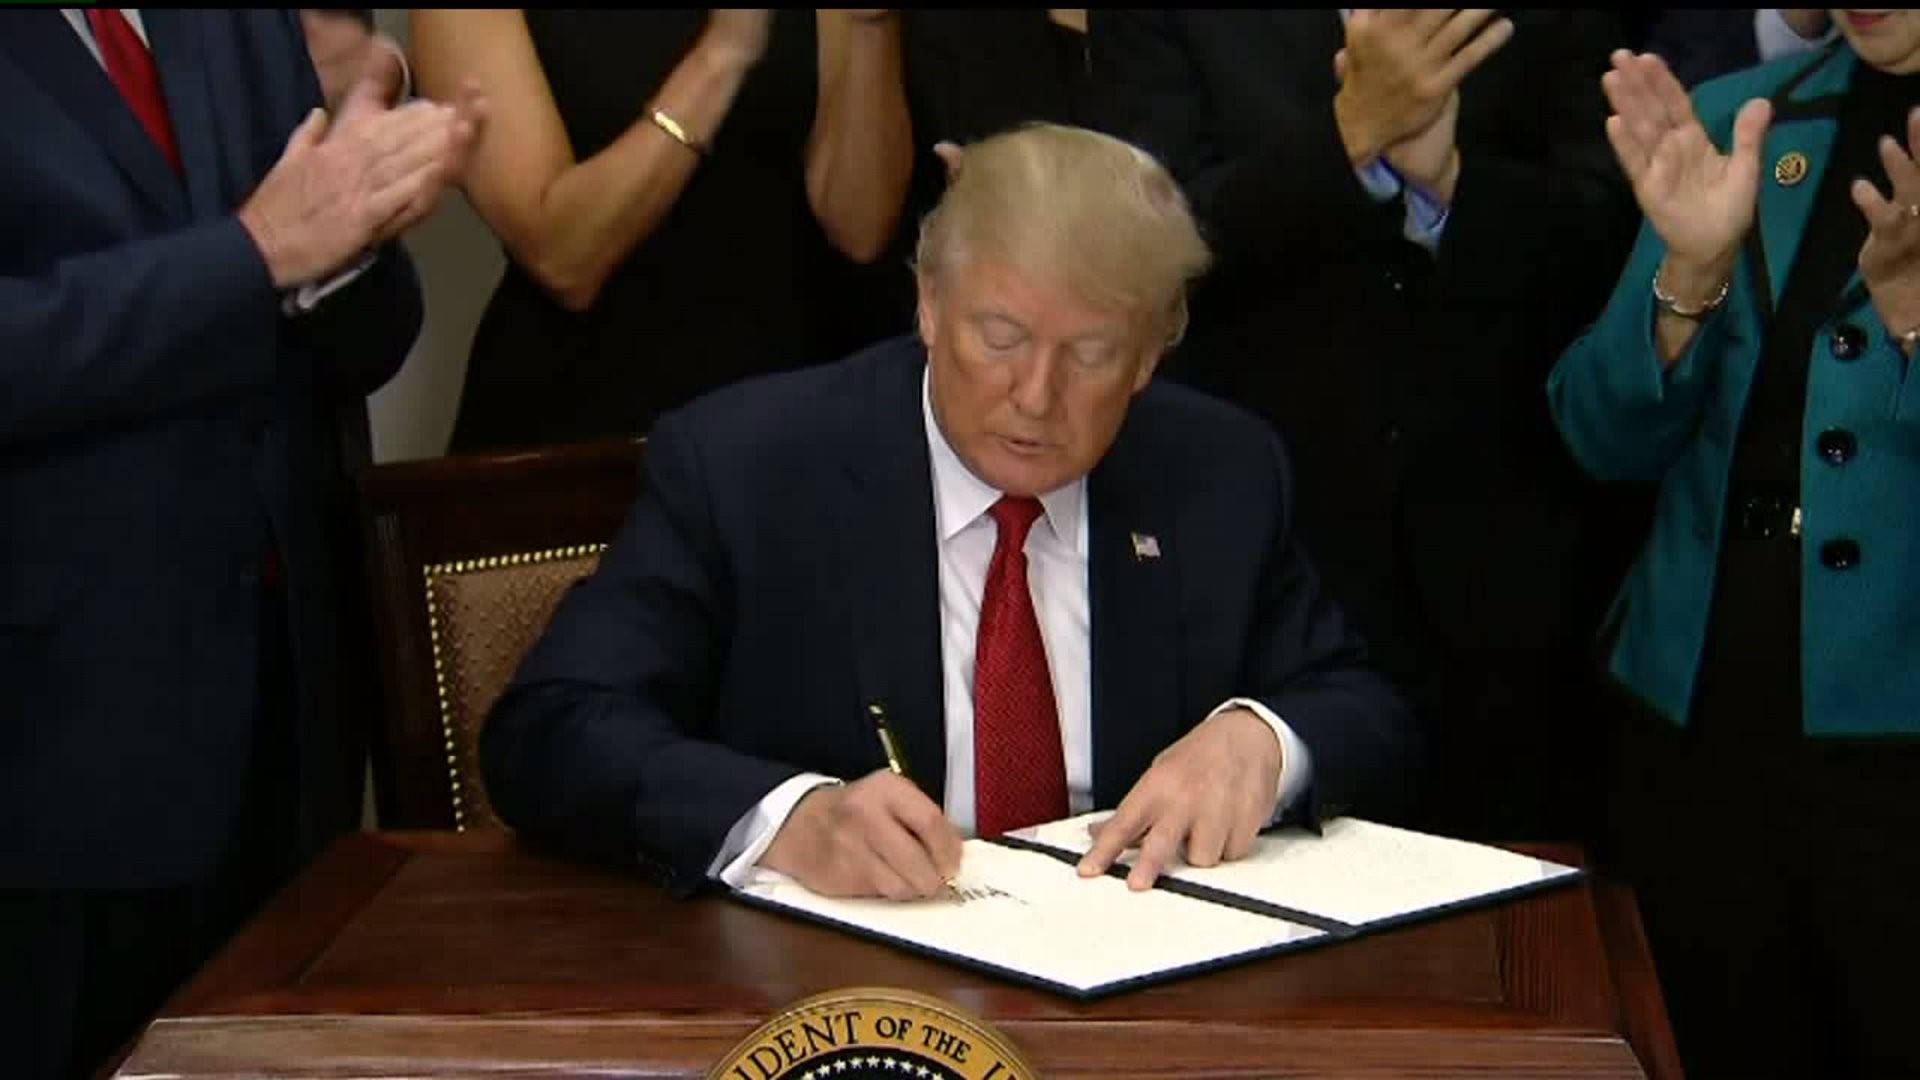 President Trump signs healthcare executive order